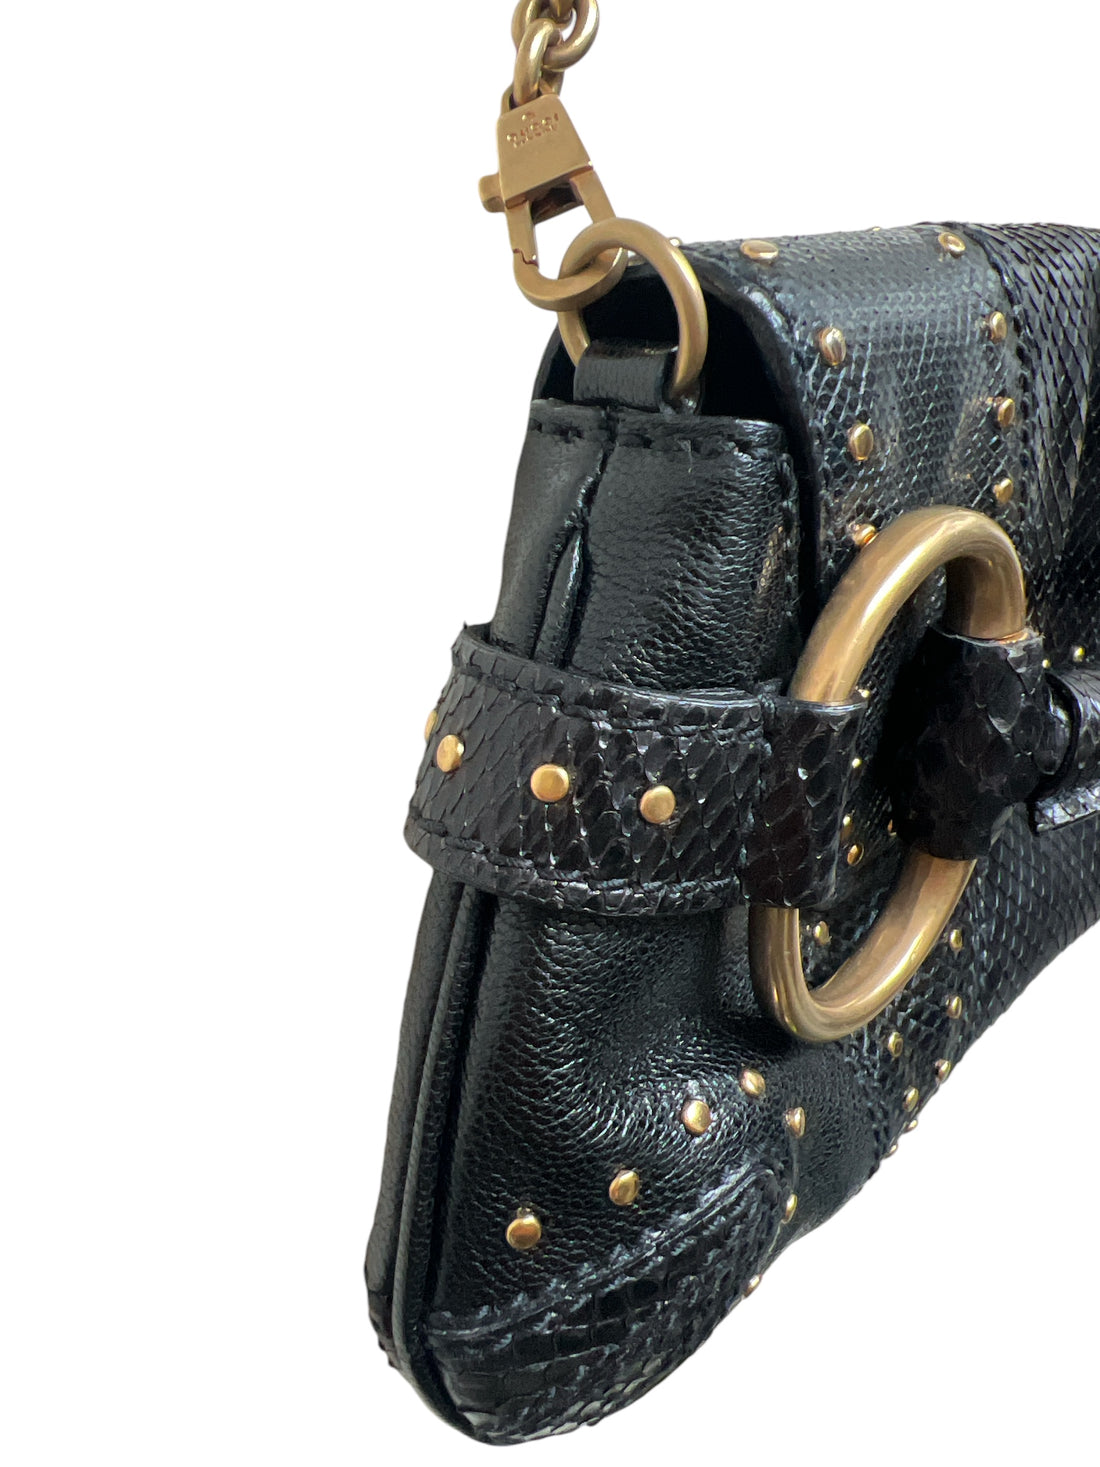 Gucci Horsebit Tasche / Clutch aus der Tom Ford Kollektion